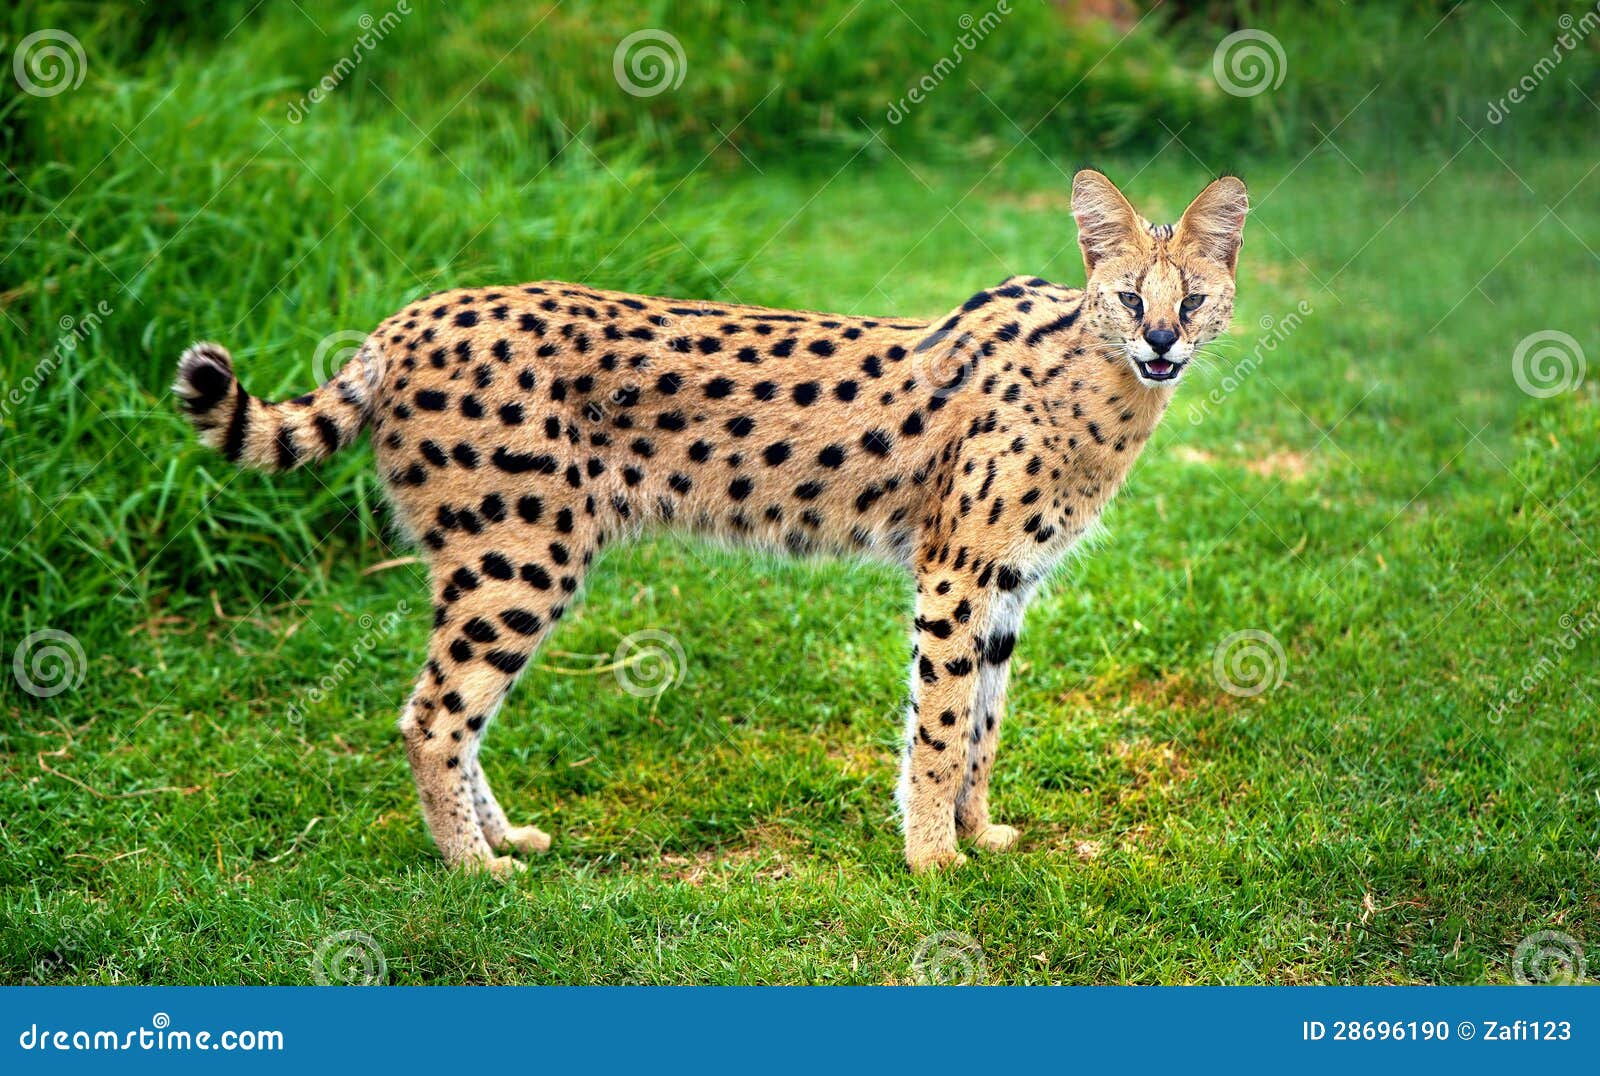 alert serval cat